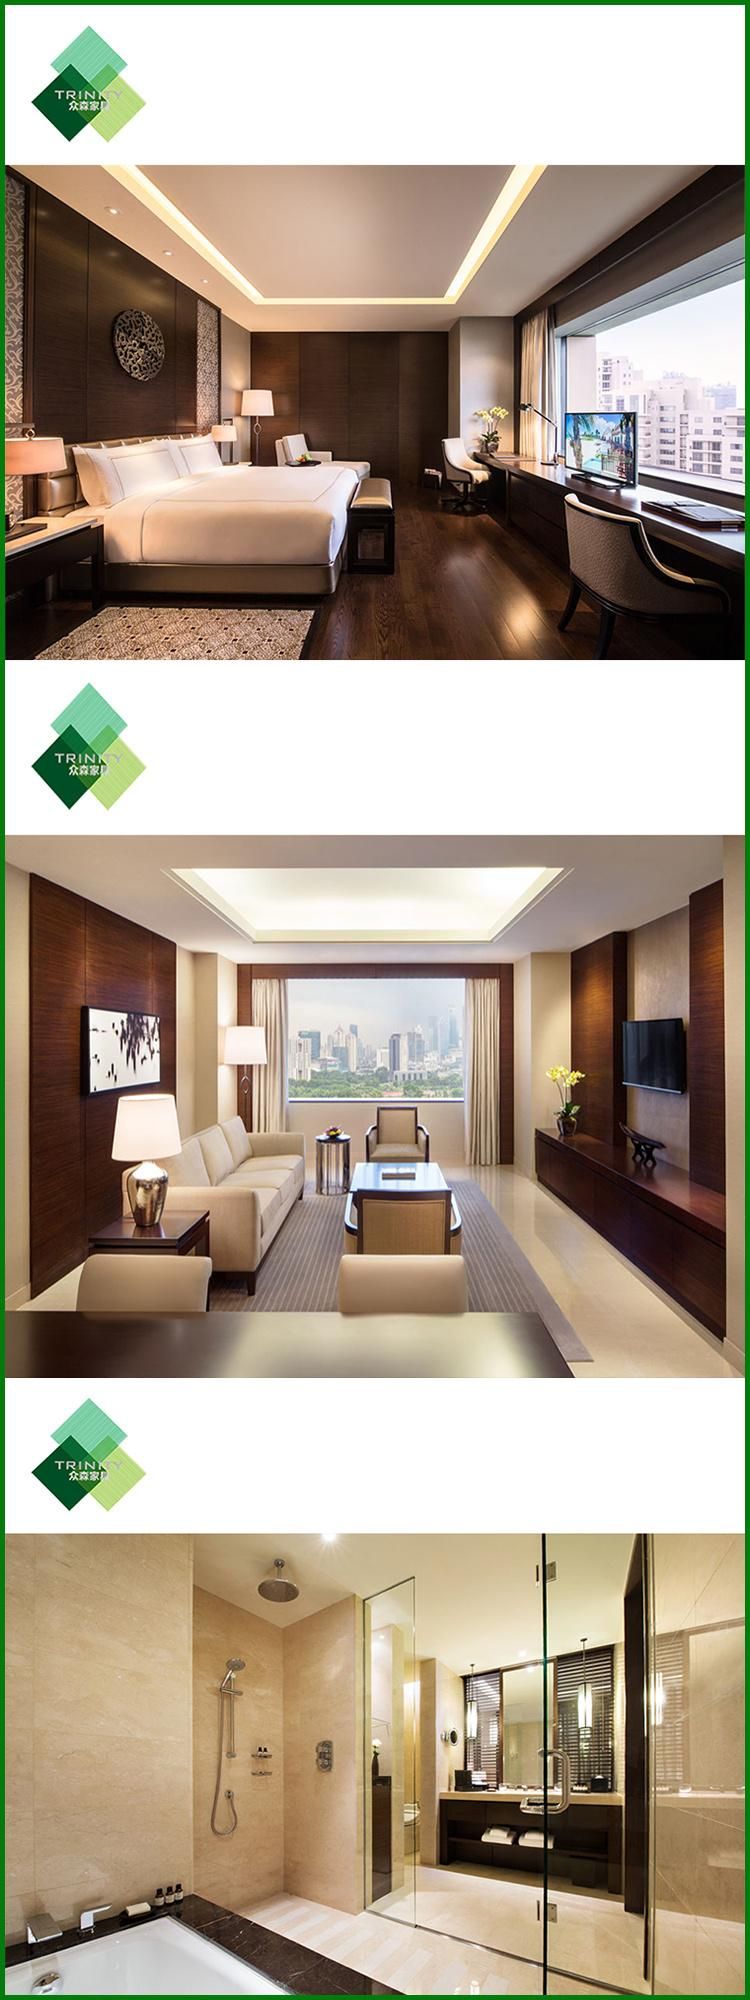 Professional Customization 5 Star Modern Solid Wood Hotel Bedroom Furniture